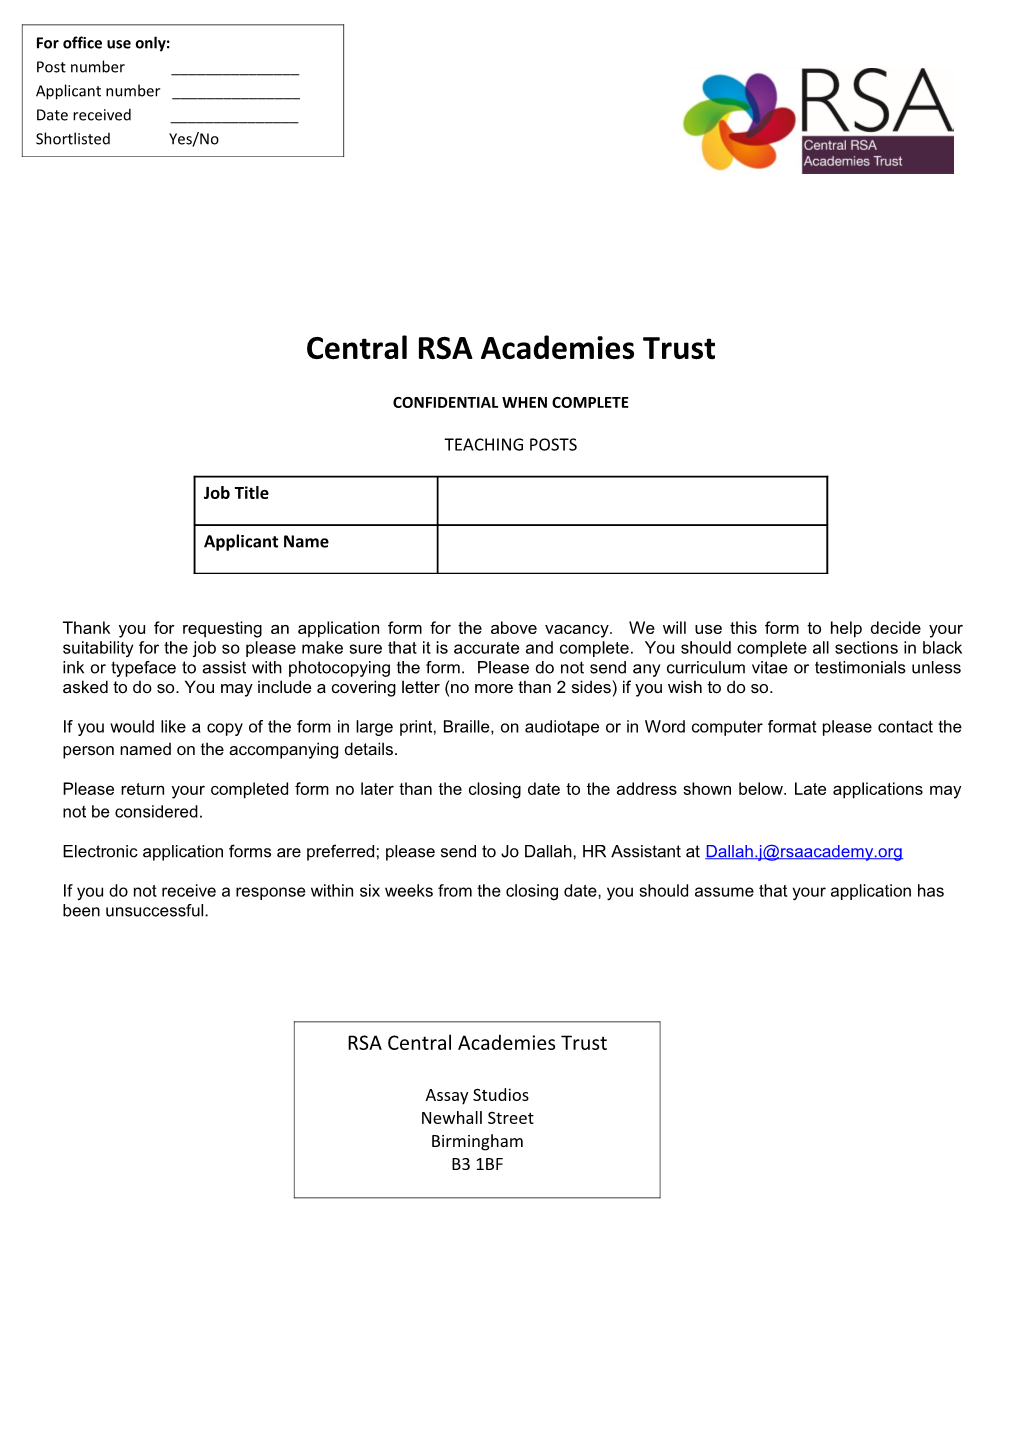 Central RSA Academies Trust